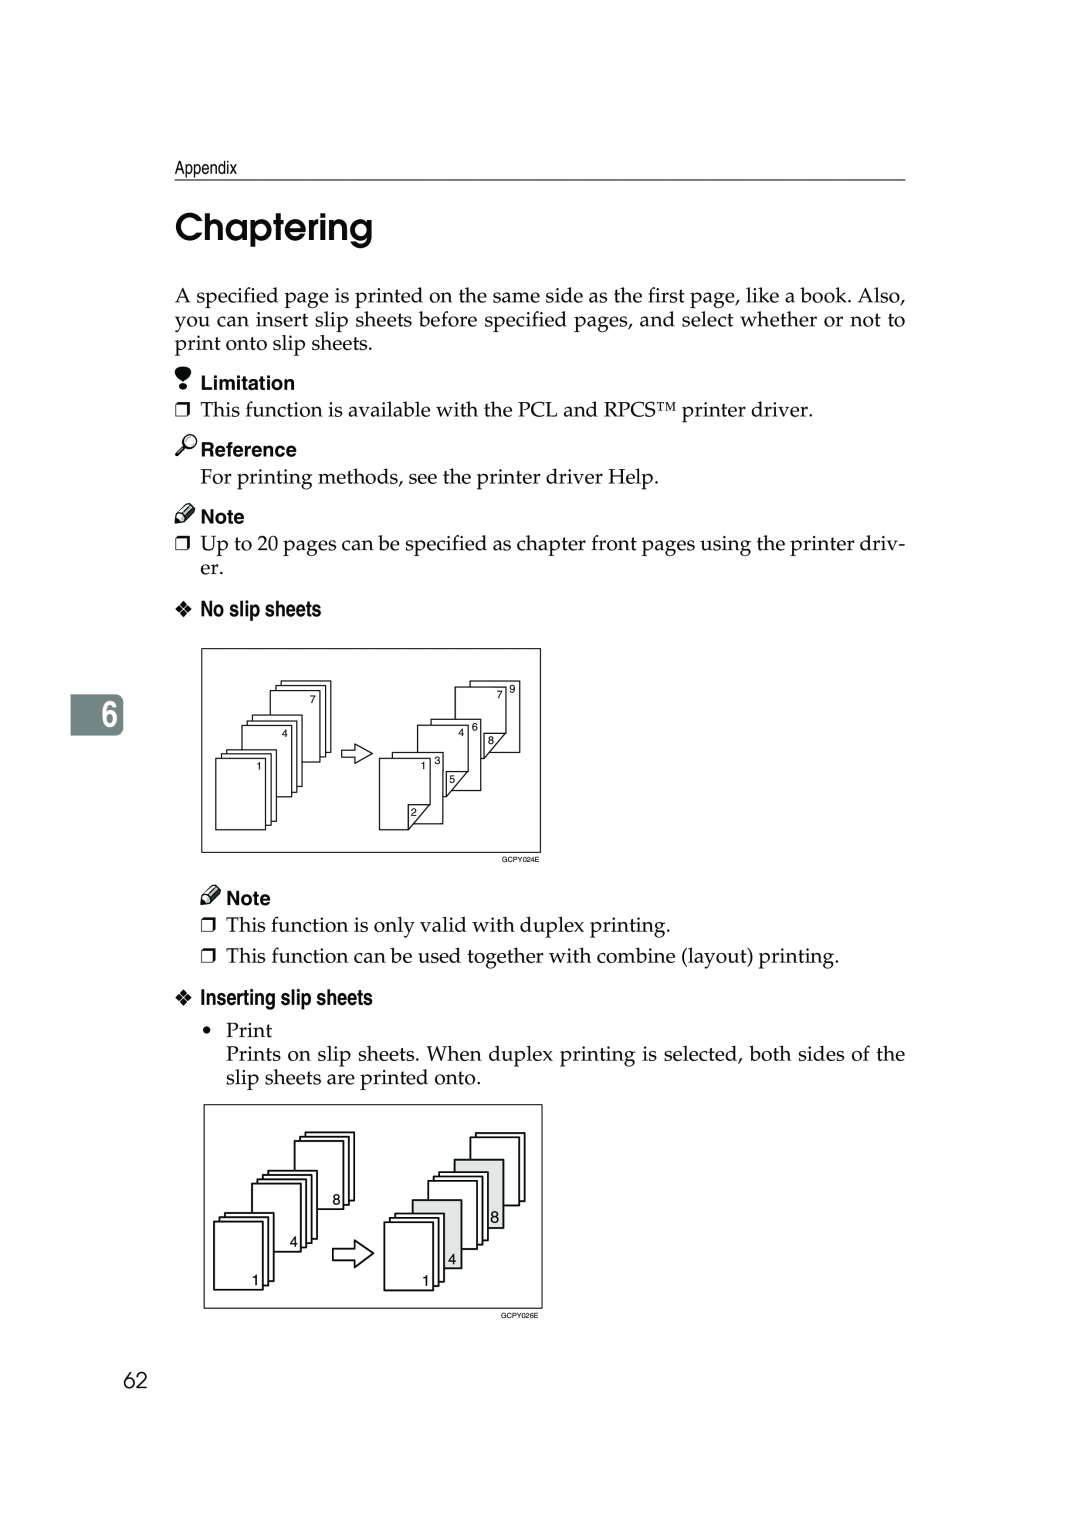 Xerox 2045e appendix Chaptering, No slip sheets, Limitation, Reference 